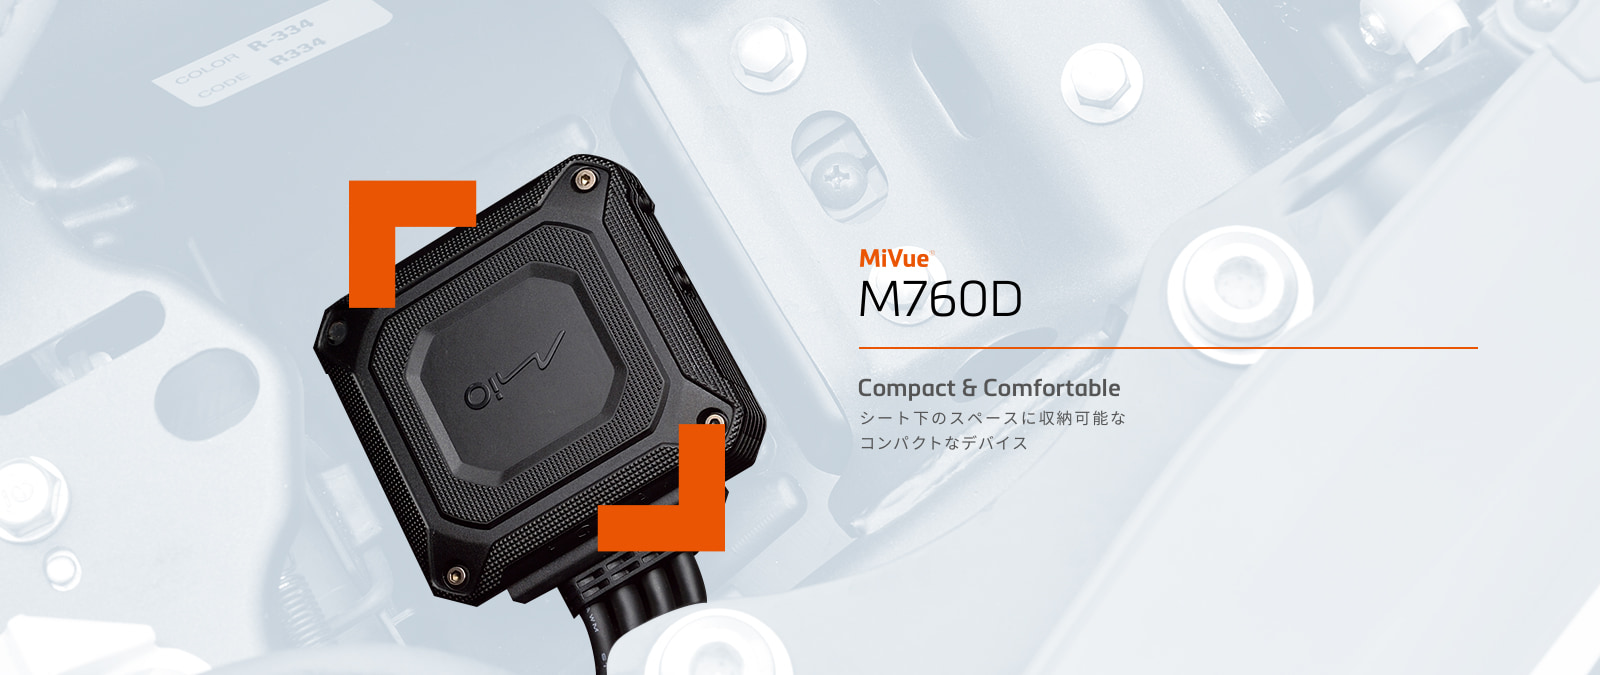 MiVue M760D「Compact & Comfortable」シート下のスペースに収納可能なコンパクトなデバイス